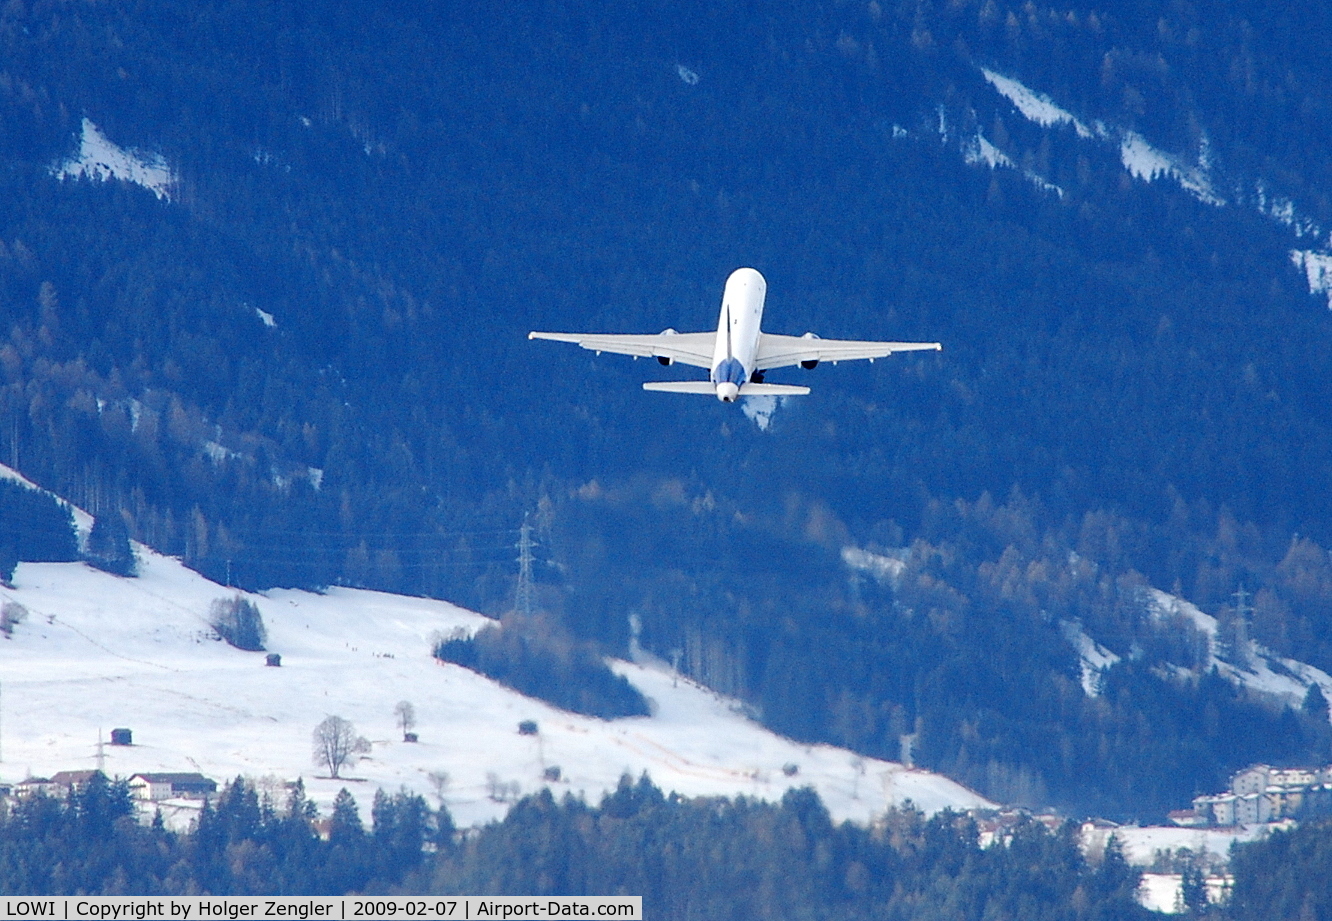 Innsbruck Airport, Innsbruck Austria (LOWI) - 15 seconds after take-off